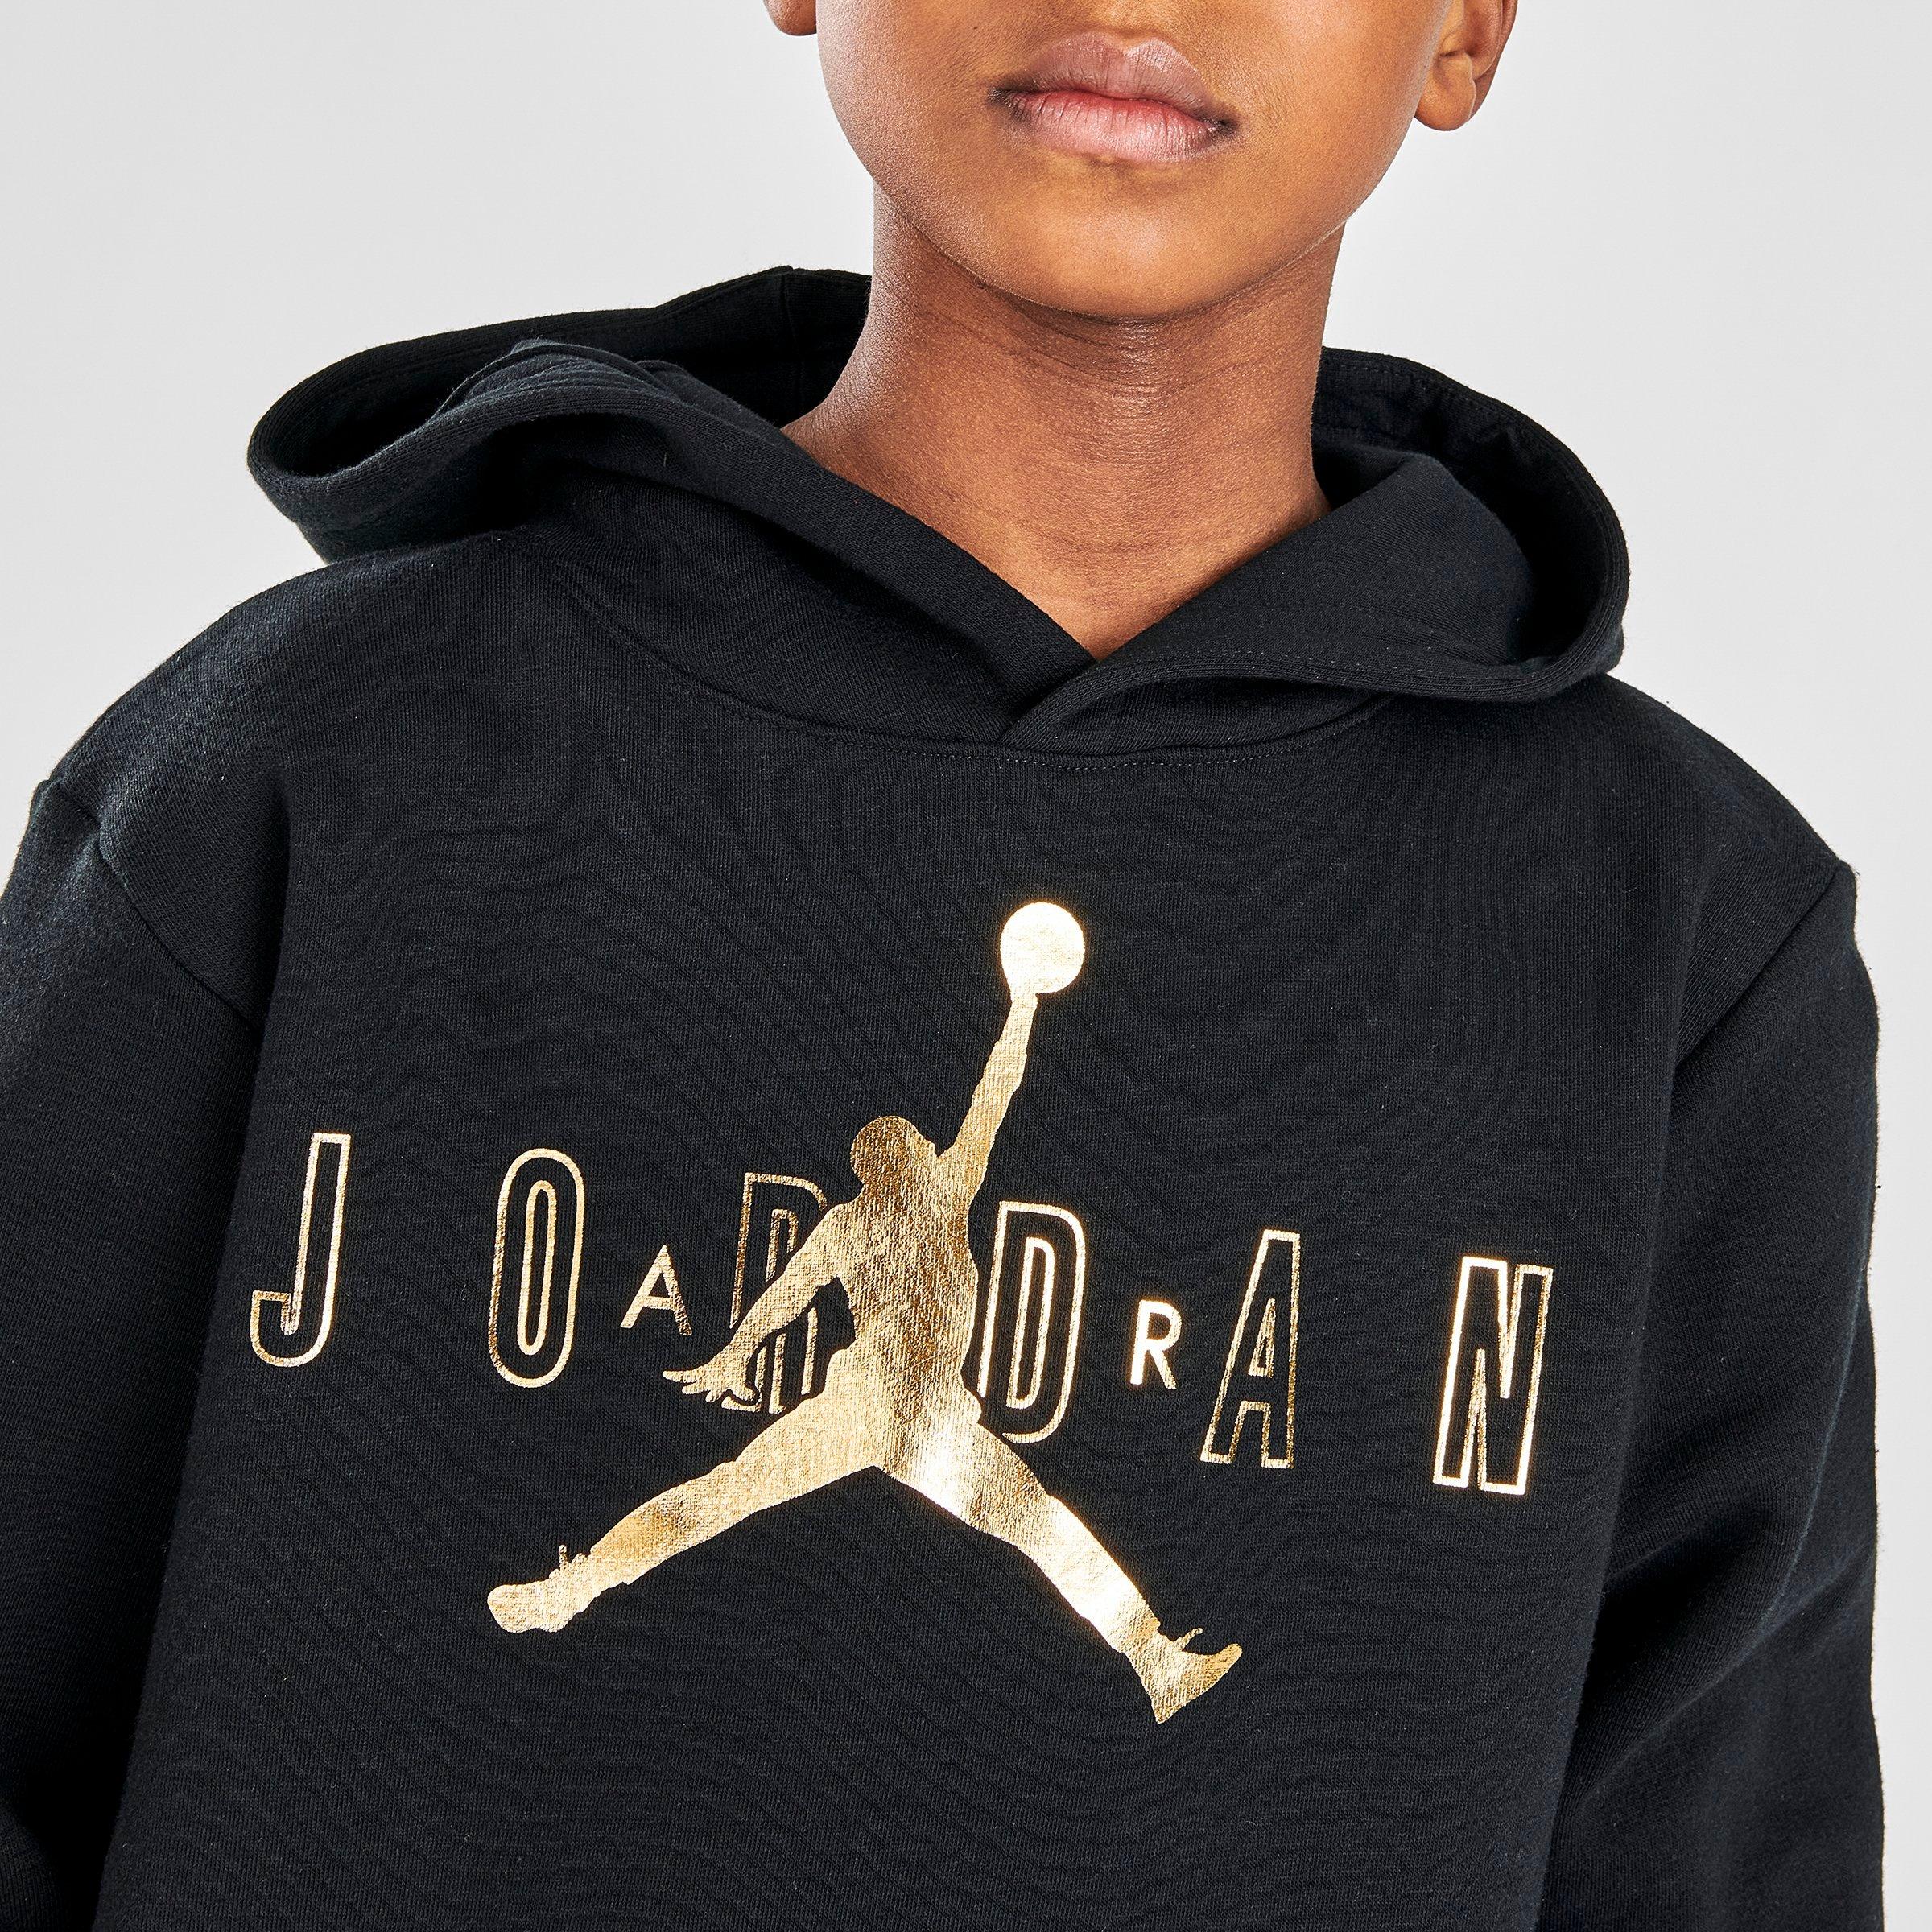 black and gold jordan sweatshirt